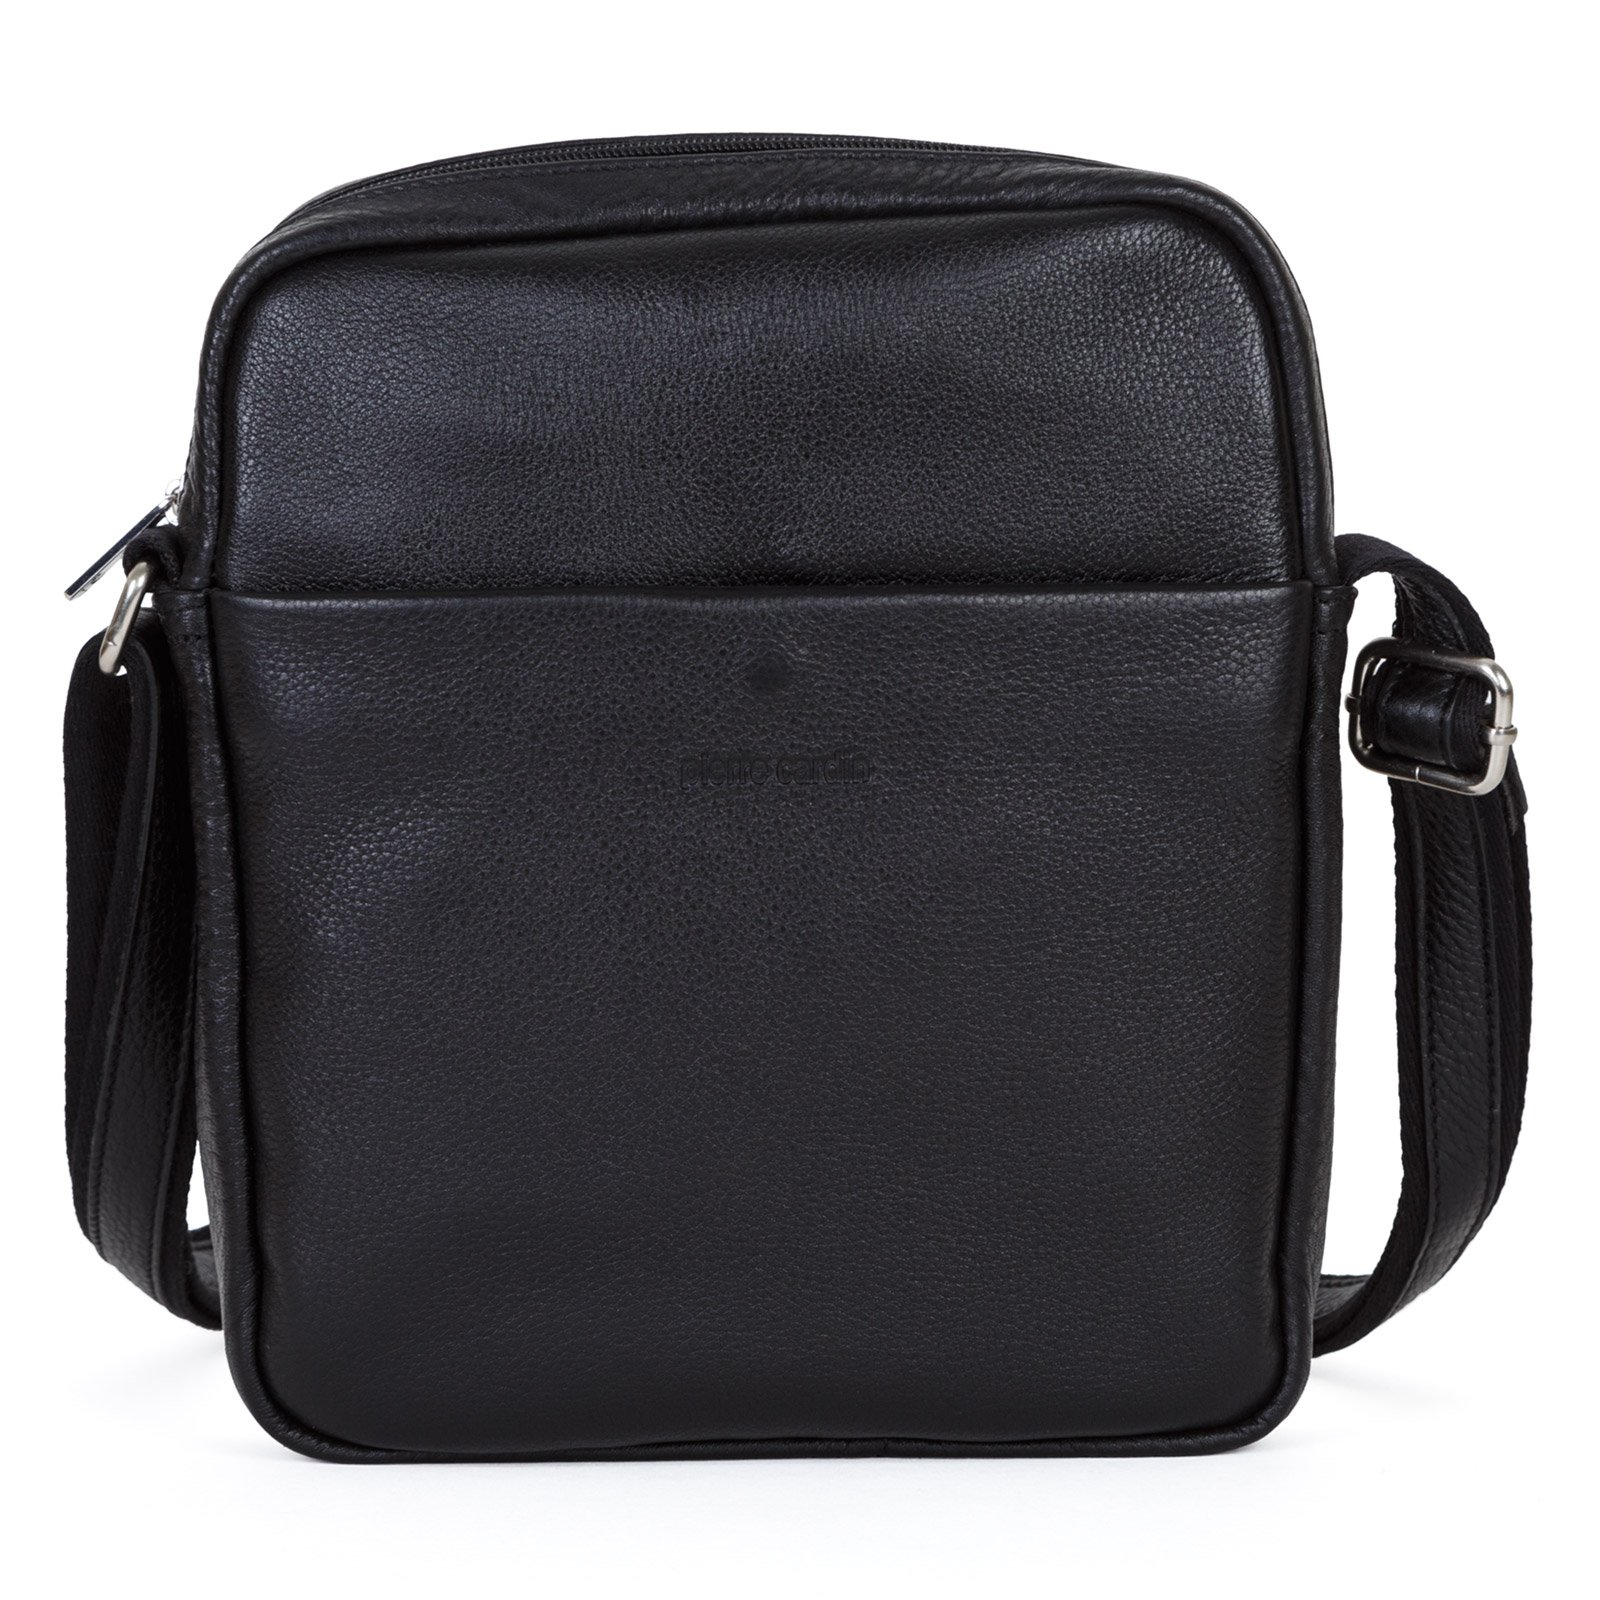 Slim Leather iPad Satchel - Accessories-Bags : Fifth Avenue Menswear ...